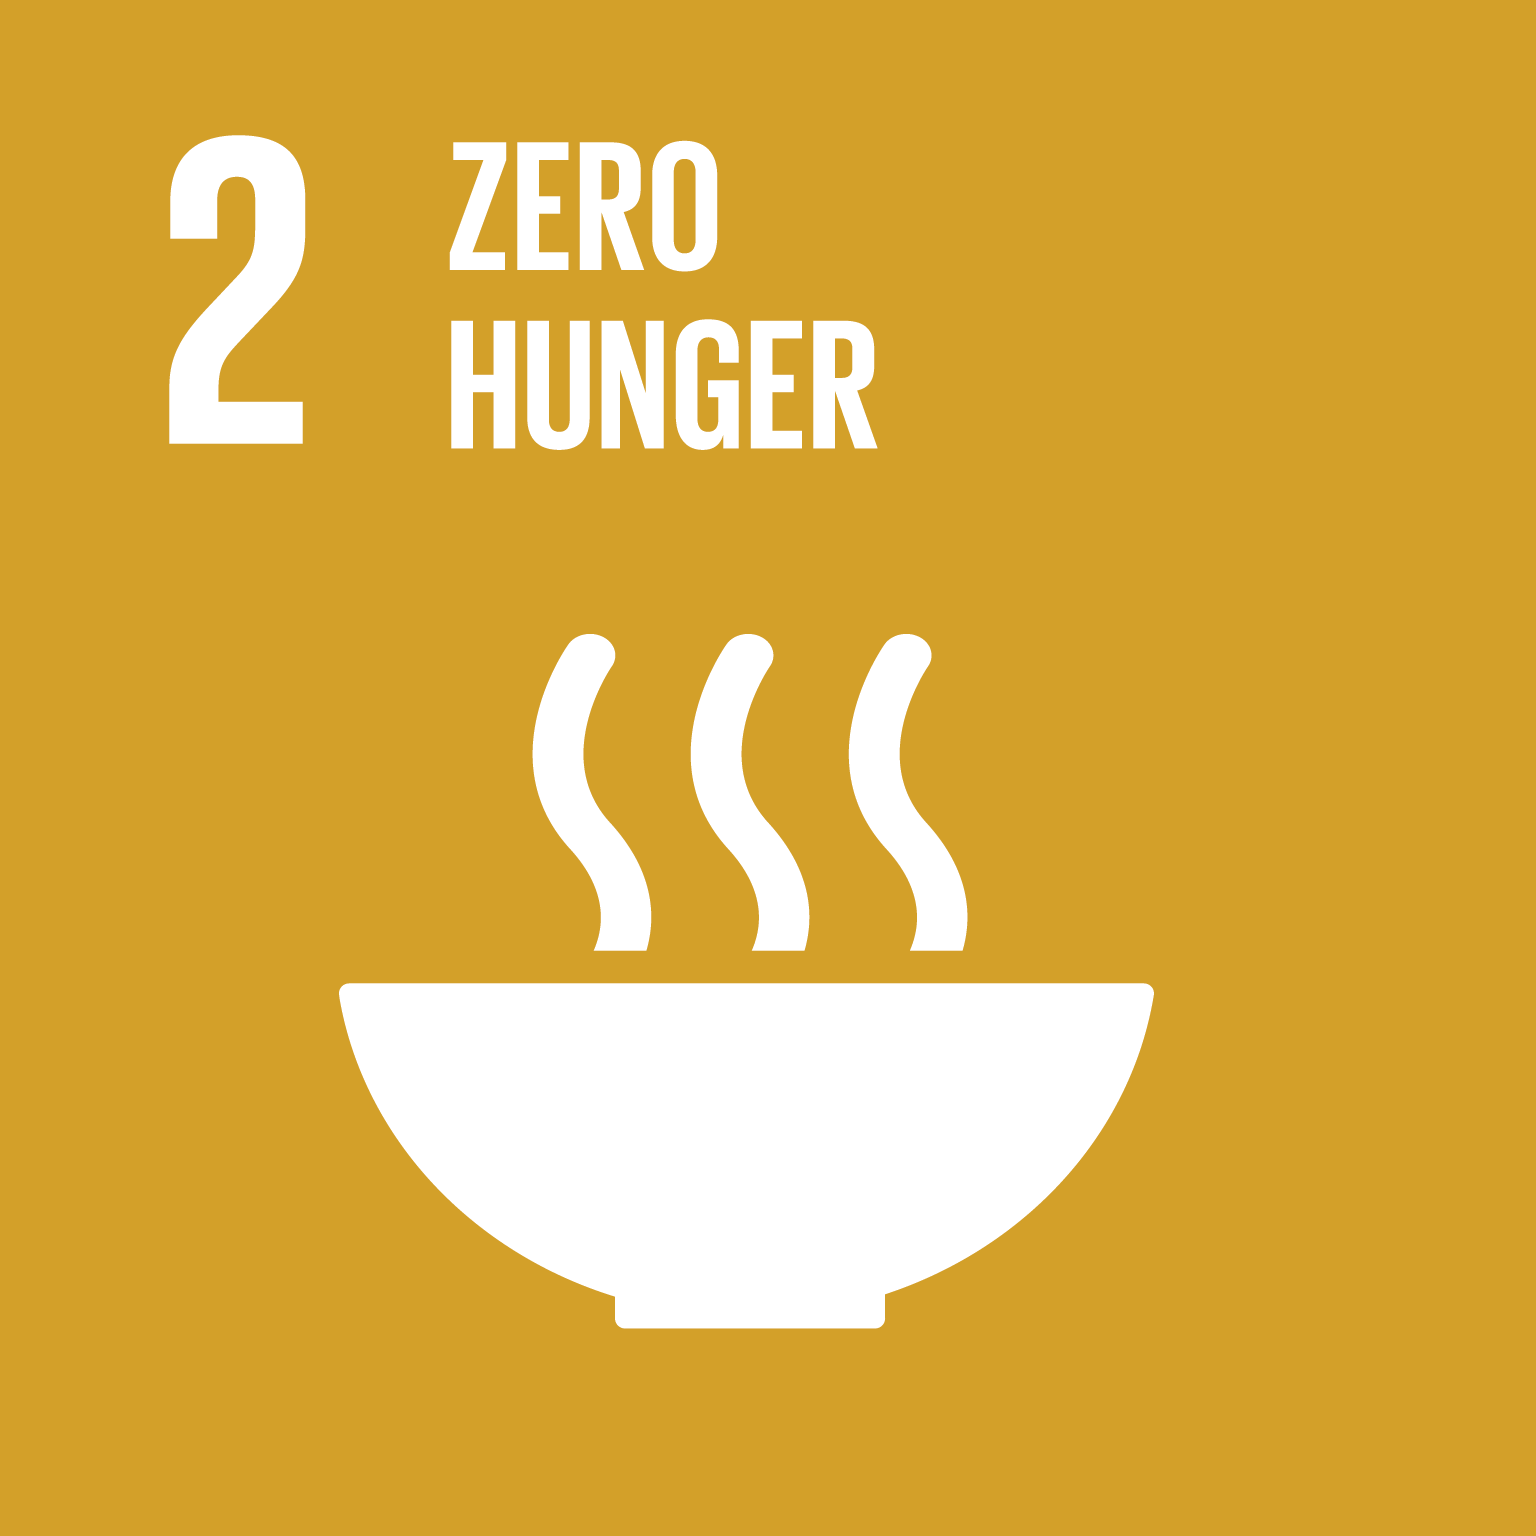 Sustainable Development Goal: Zero Hunger